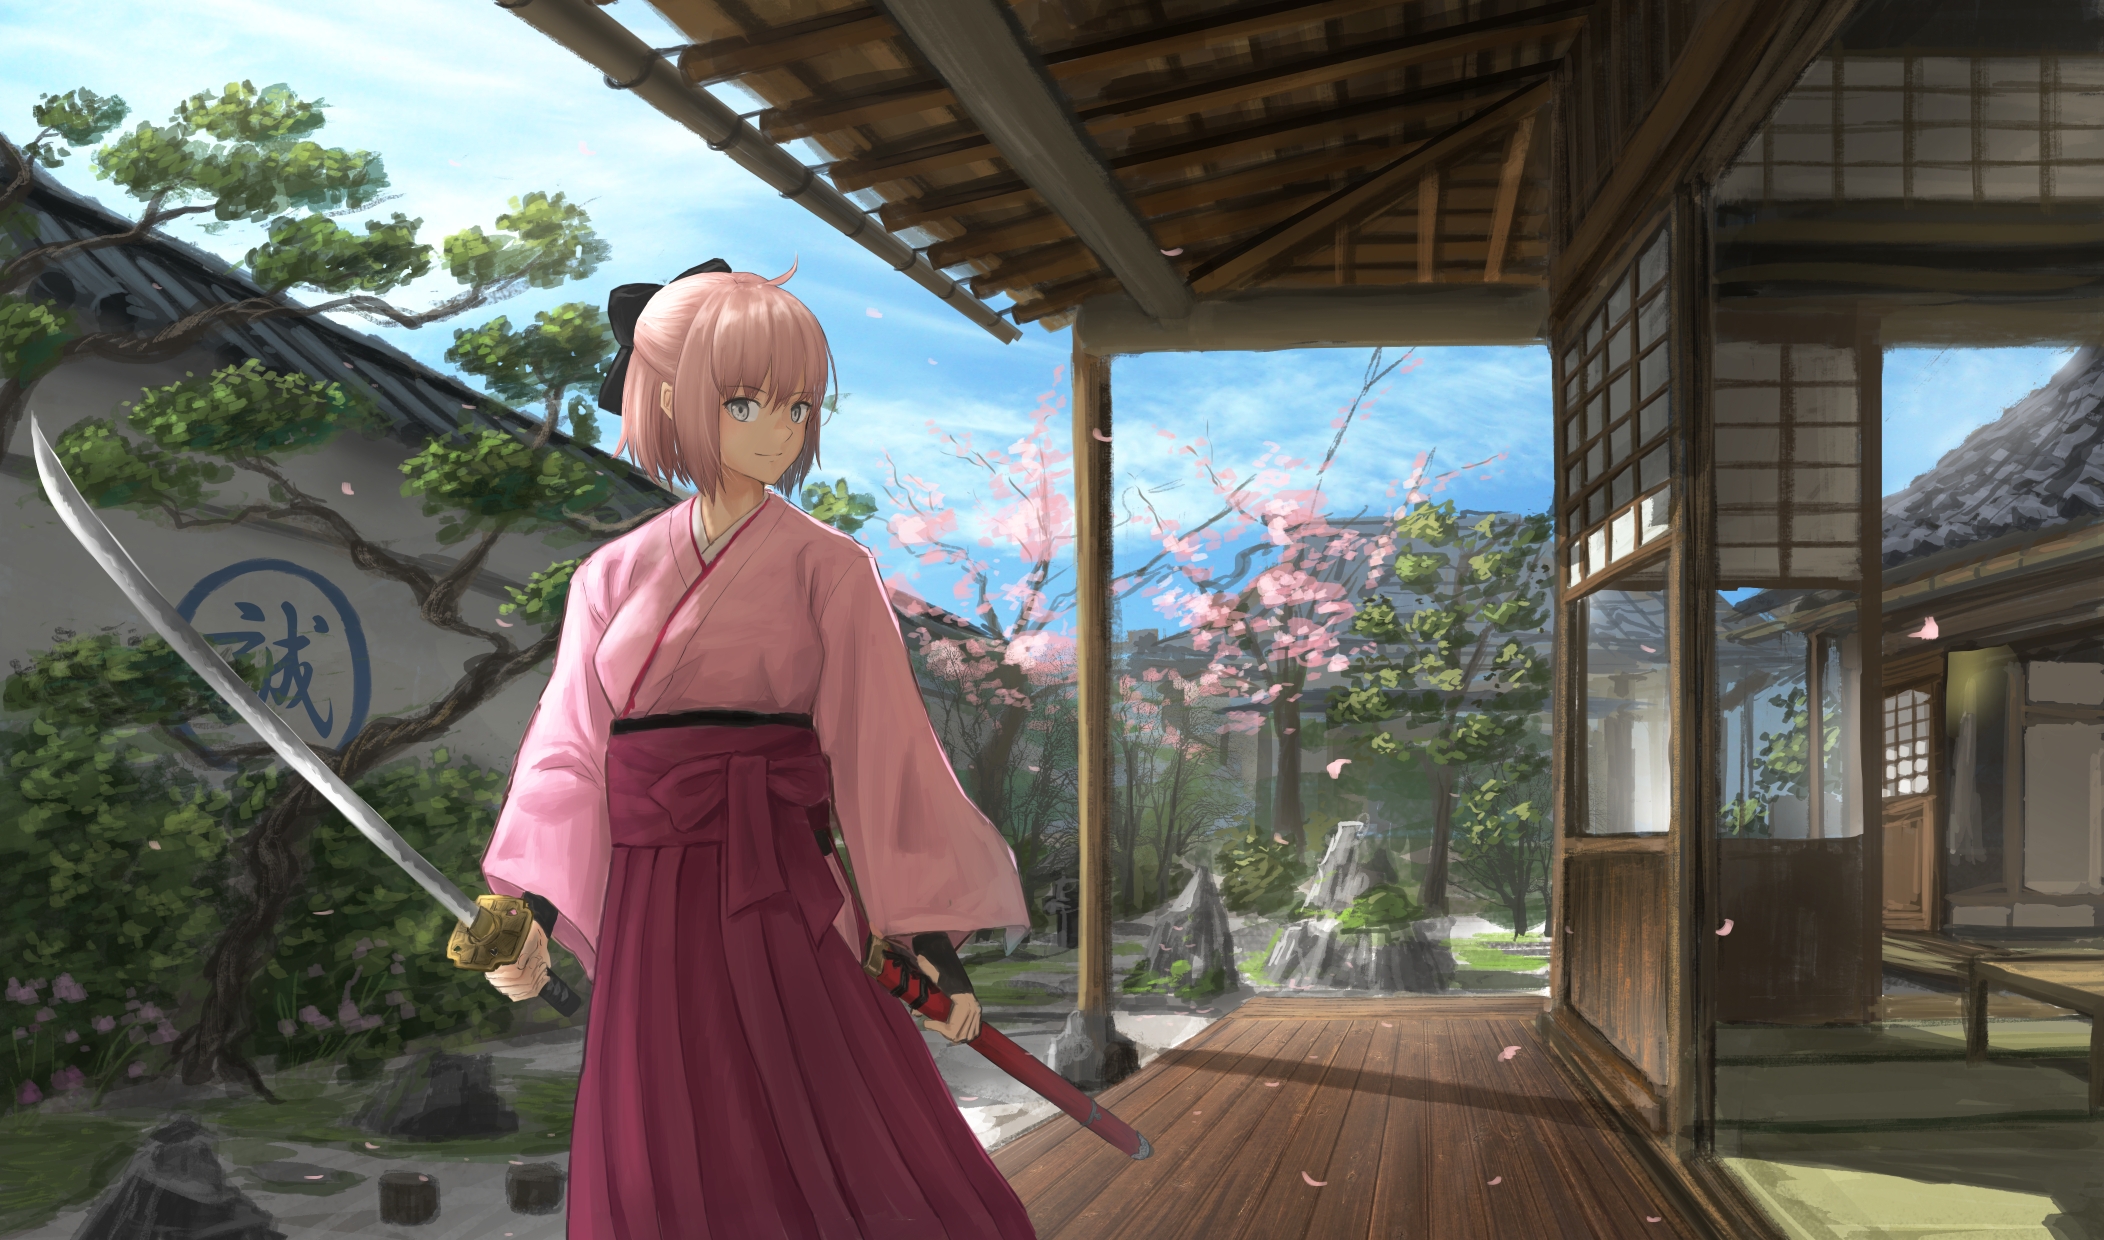 Wallpapers sakura saber swords sakura blossom on the desktop